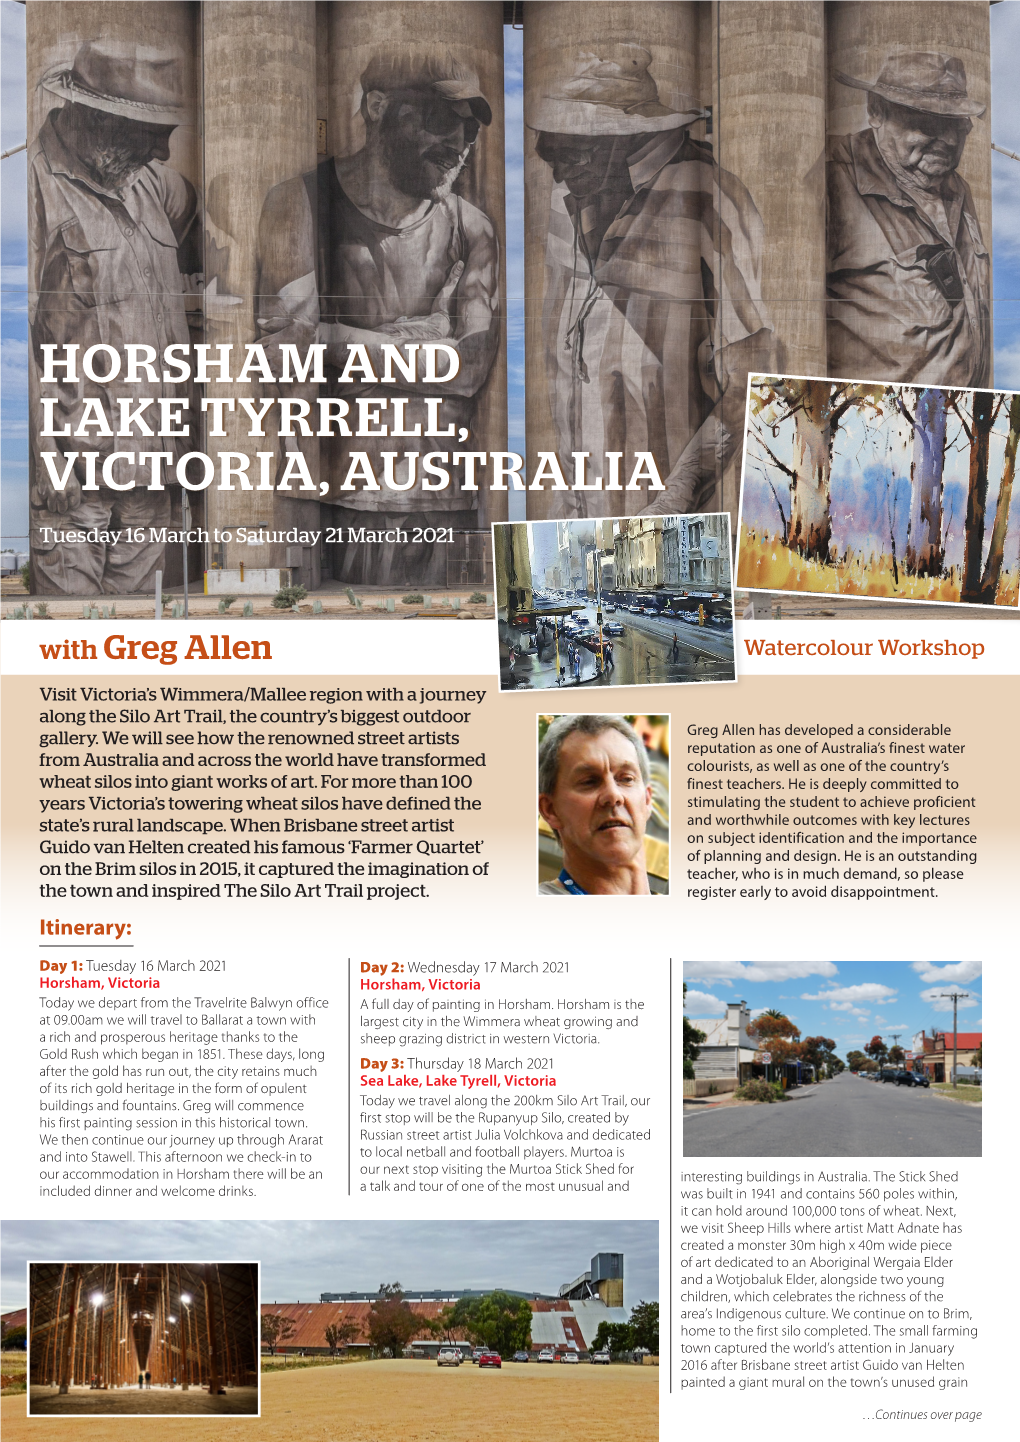 Horsham and Lake Tyrrell, Victoria, Australia